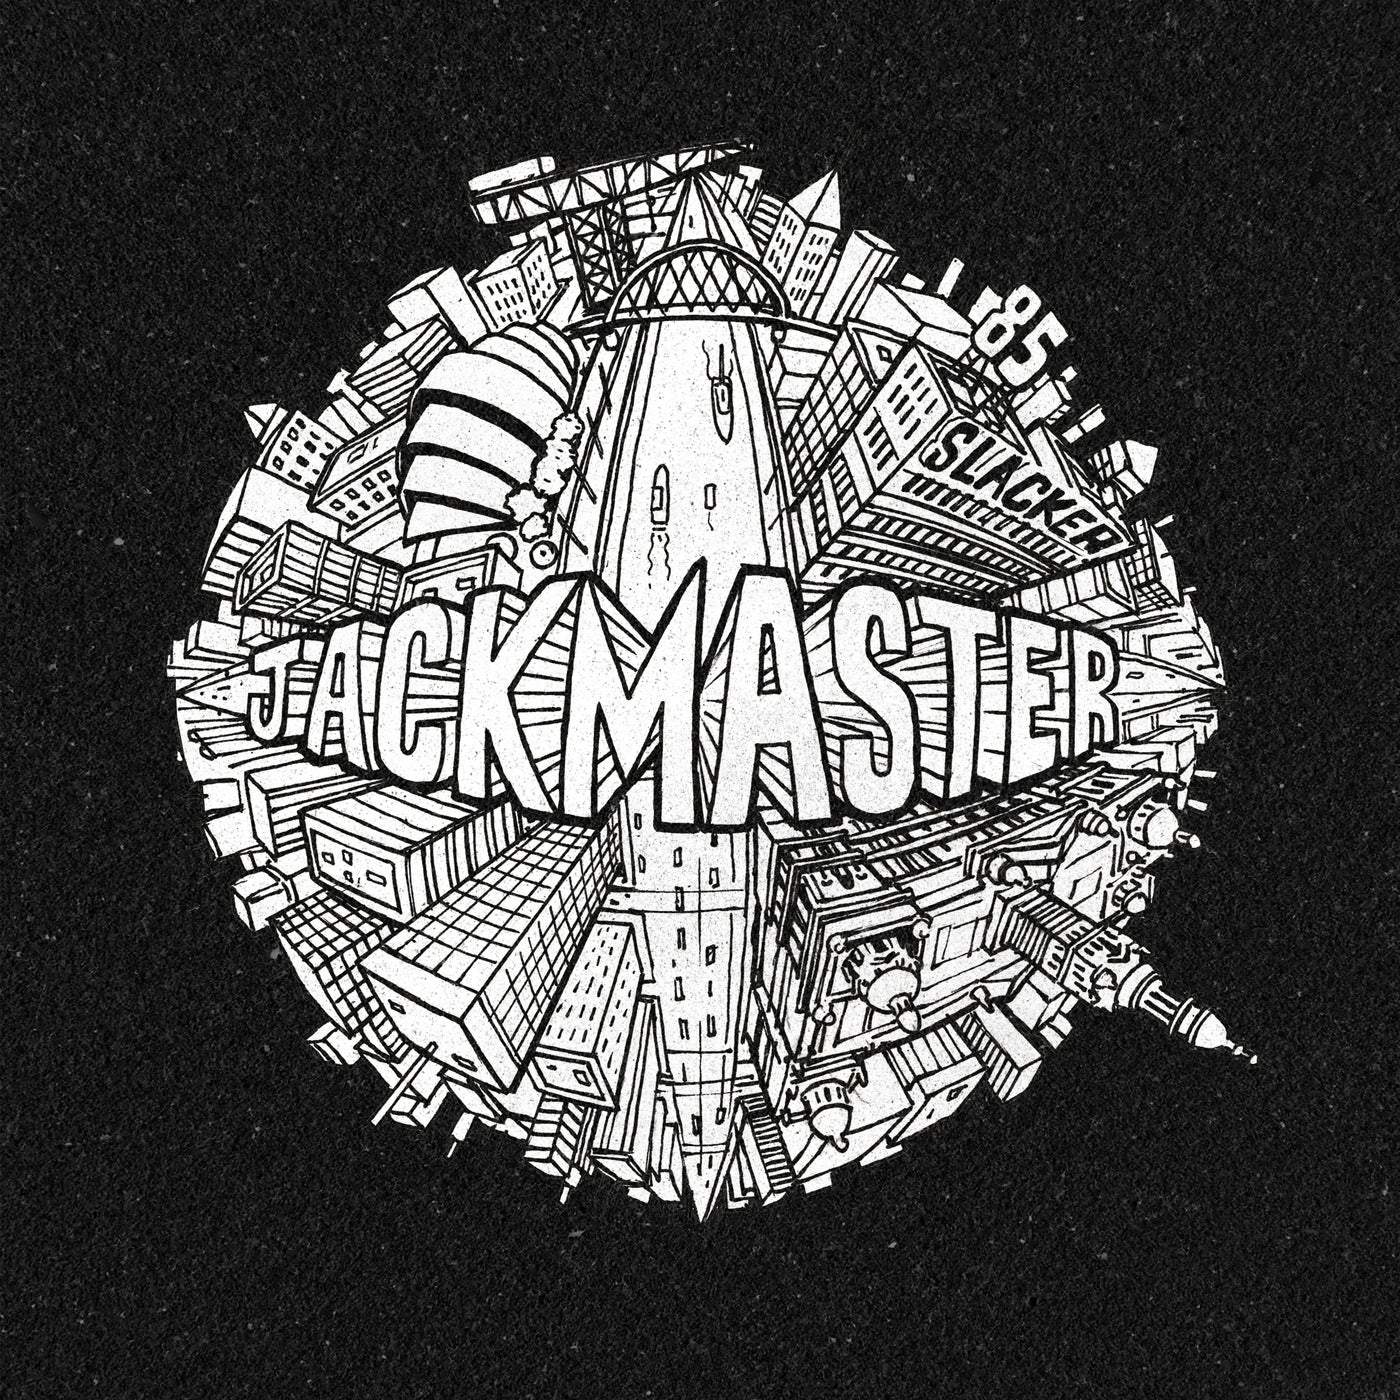 image cover: Jackmaster & Jasper James - Party Going On EP on Slacker 85